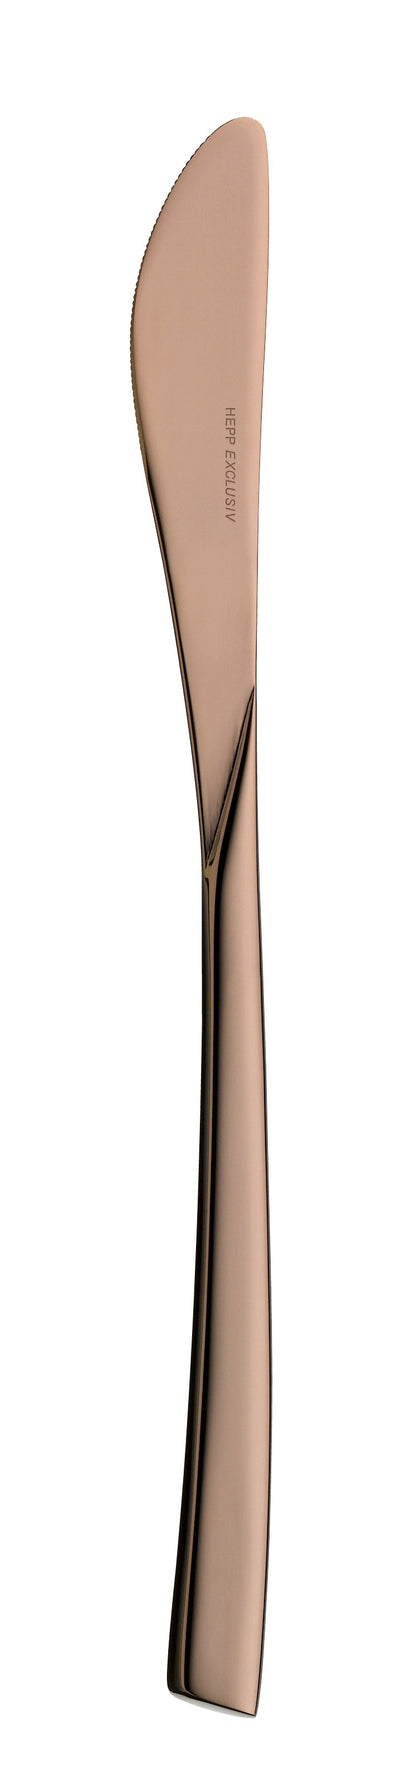 Table knife MB TALIA PVD copper 246mm